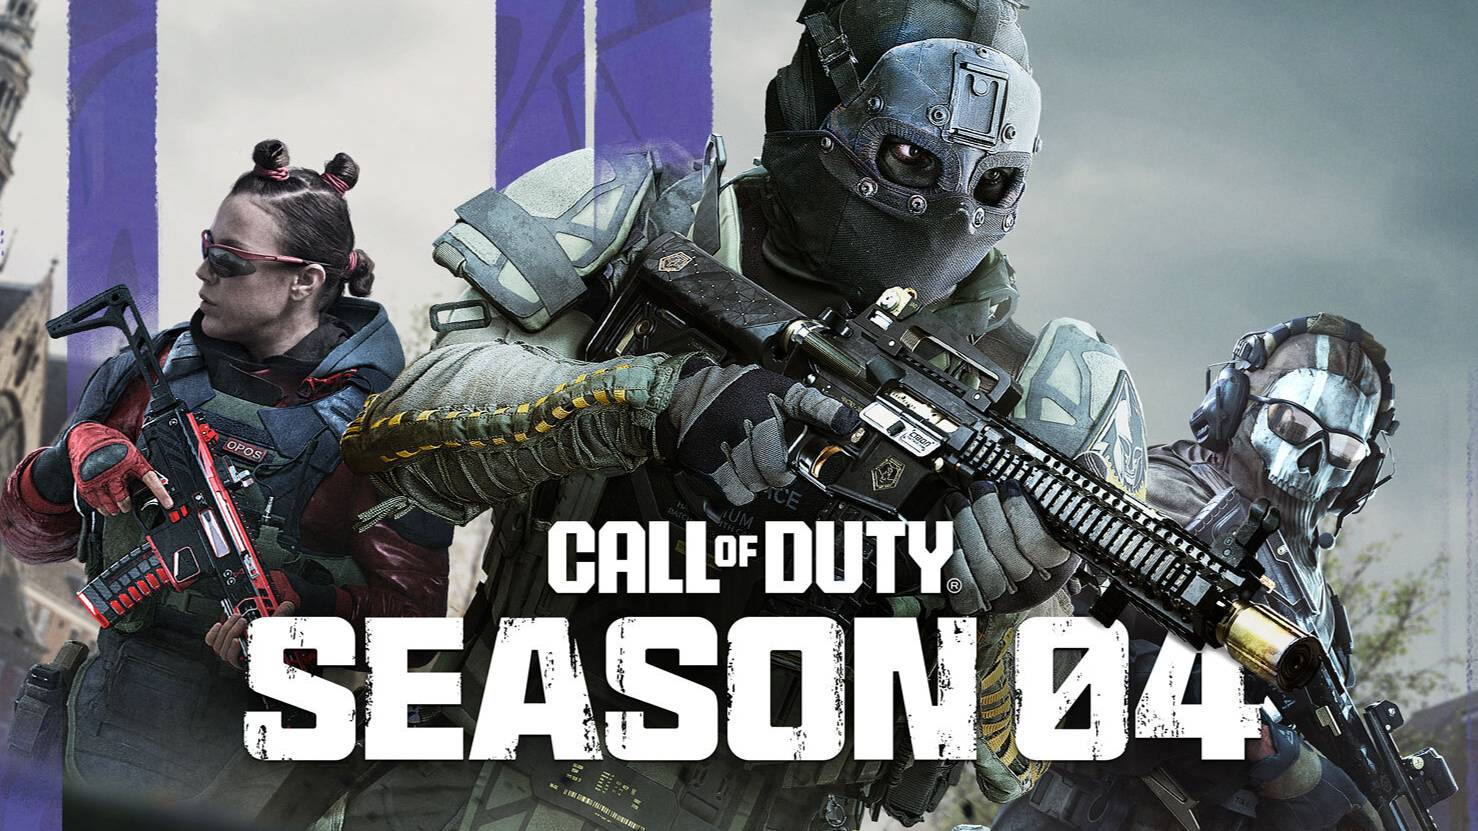 Call of Duty: Modern Warfare III multiplayer gaming  ПРЕВОСХОДСТВО - ЗОЛОТЫЕ ГАНЫ